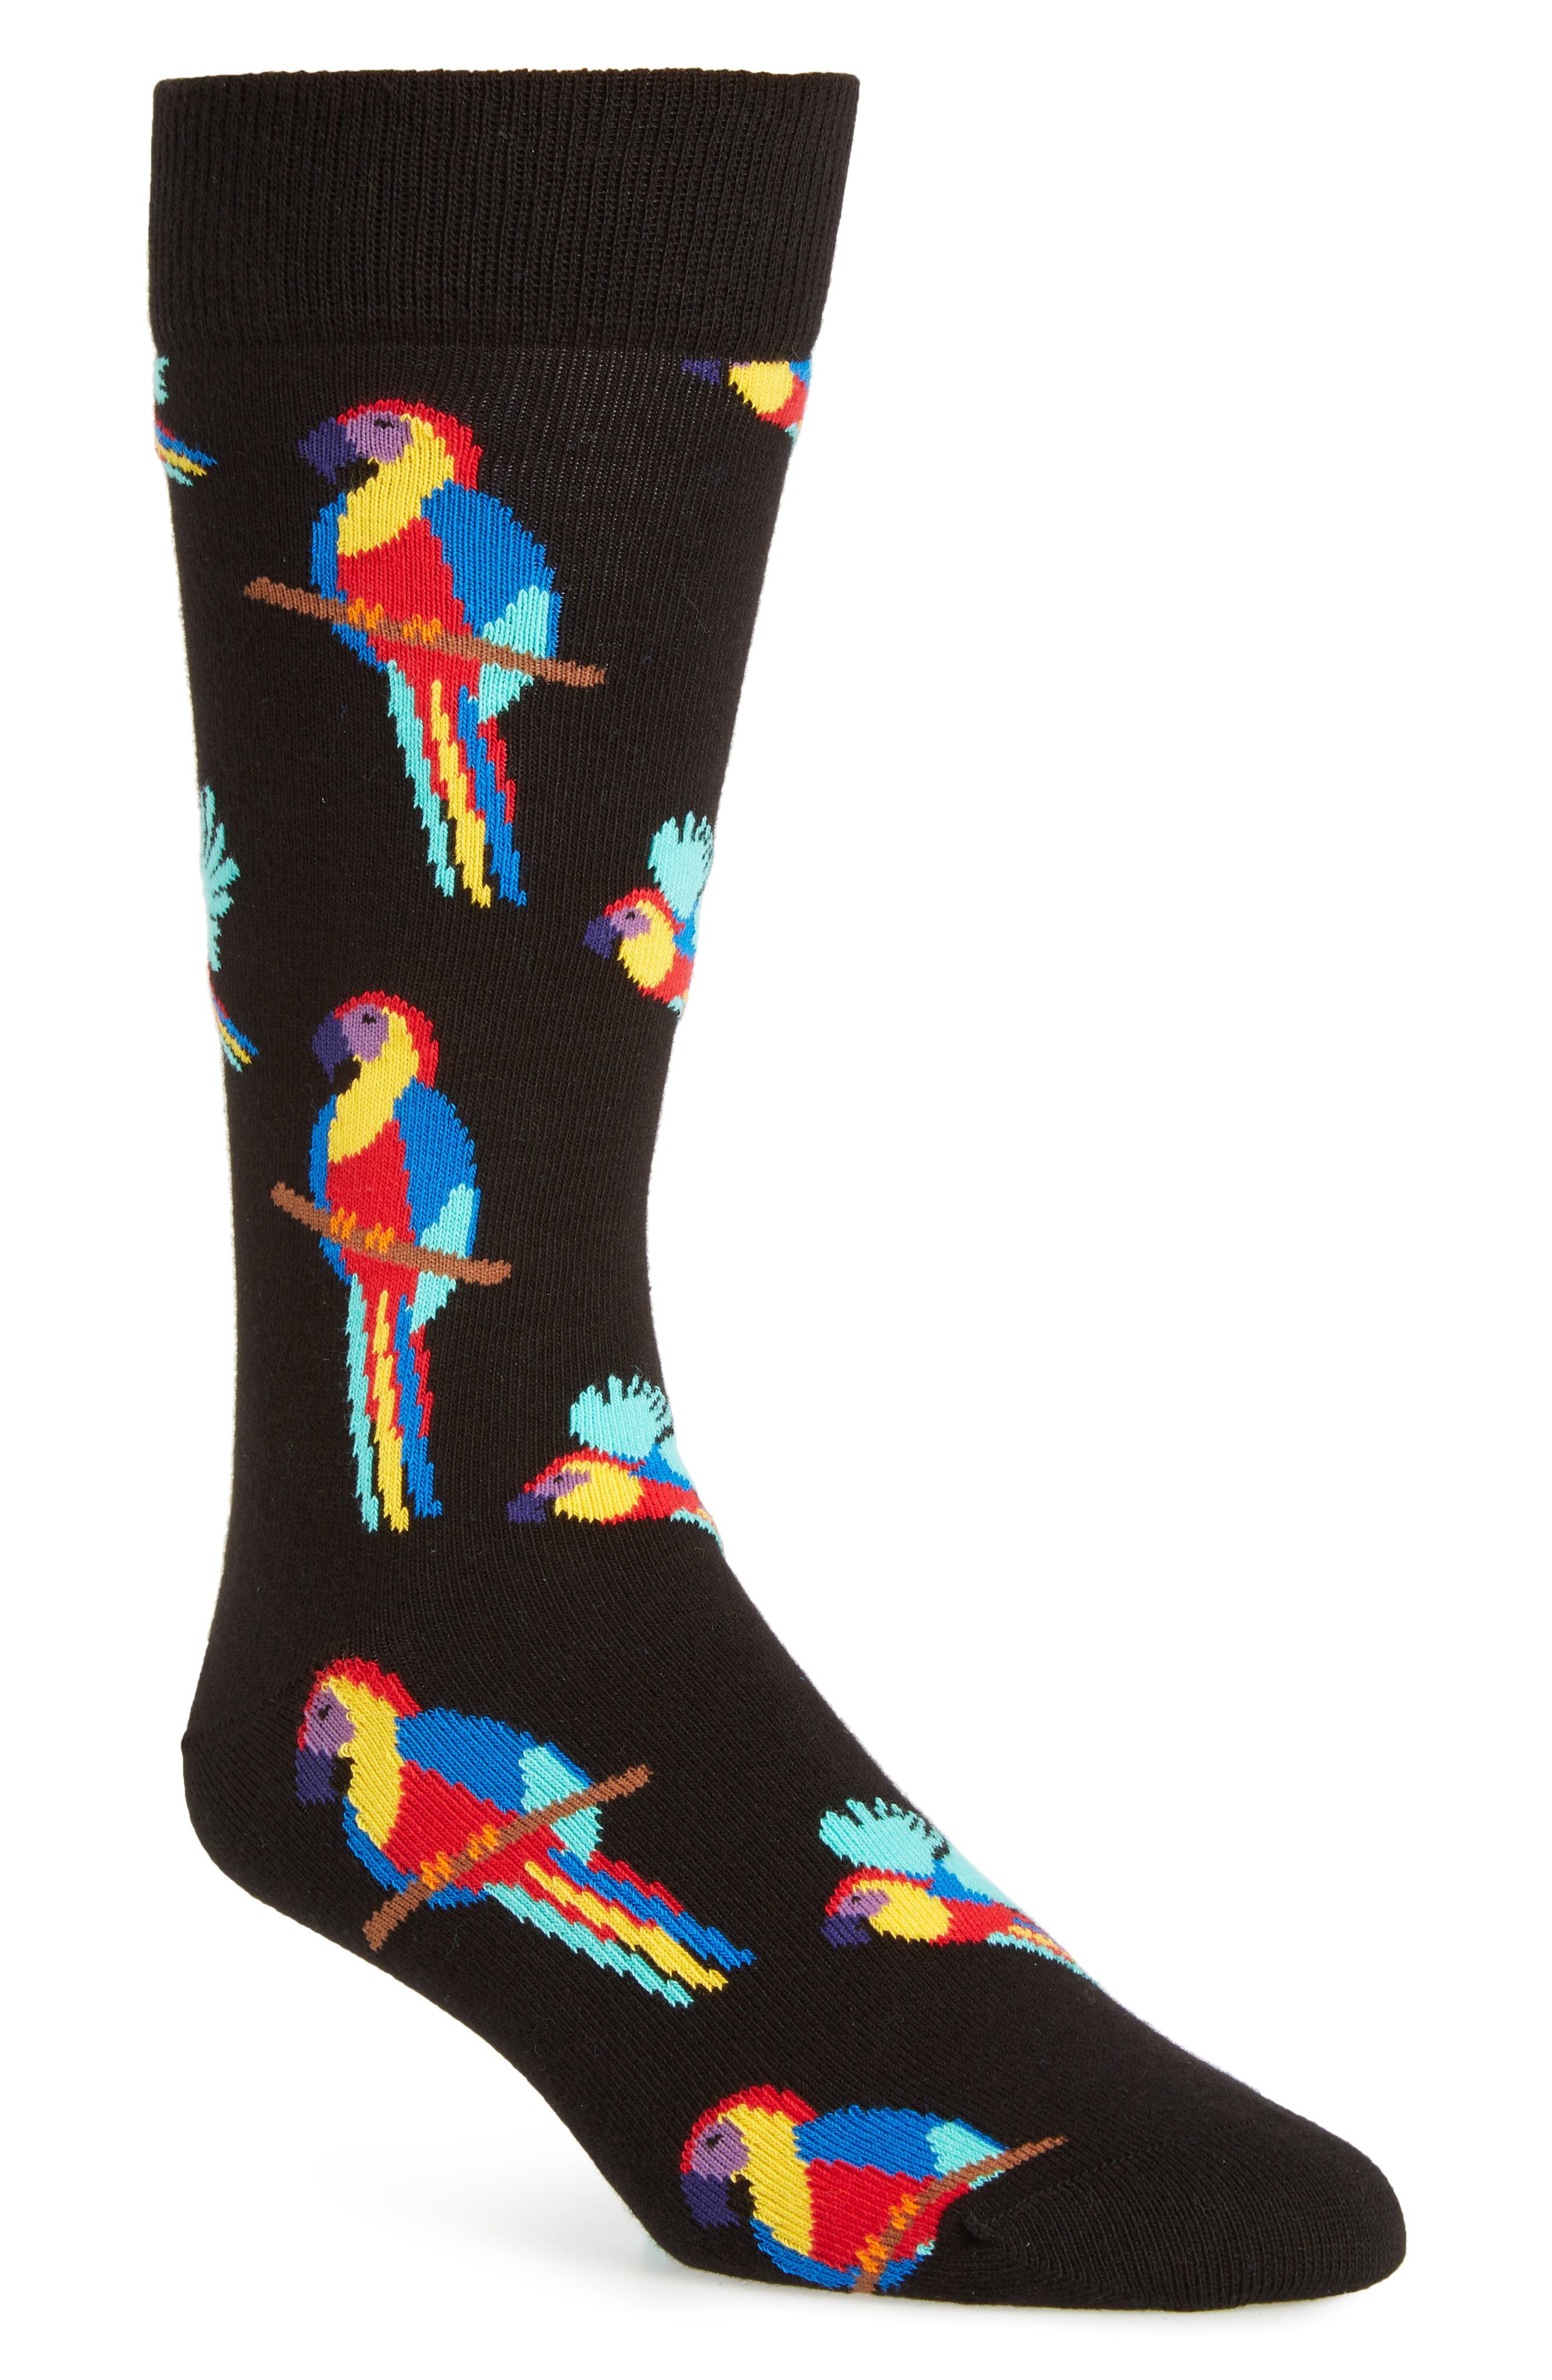 Lyst - Happy Socks Parrot Socks in Black for Men